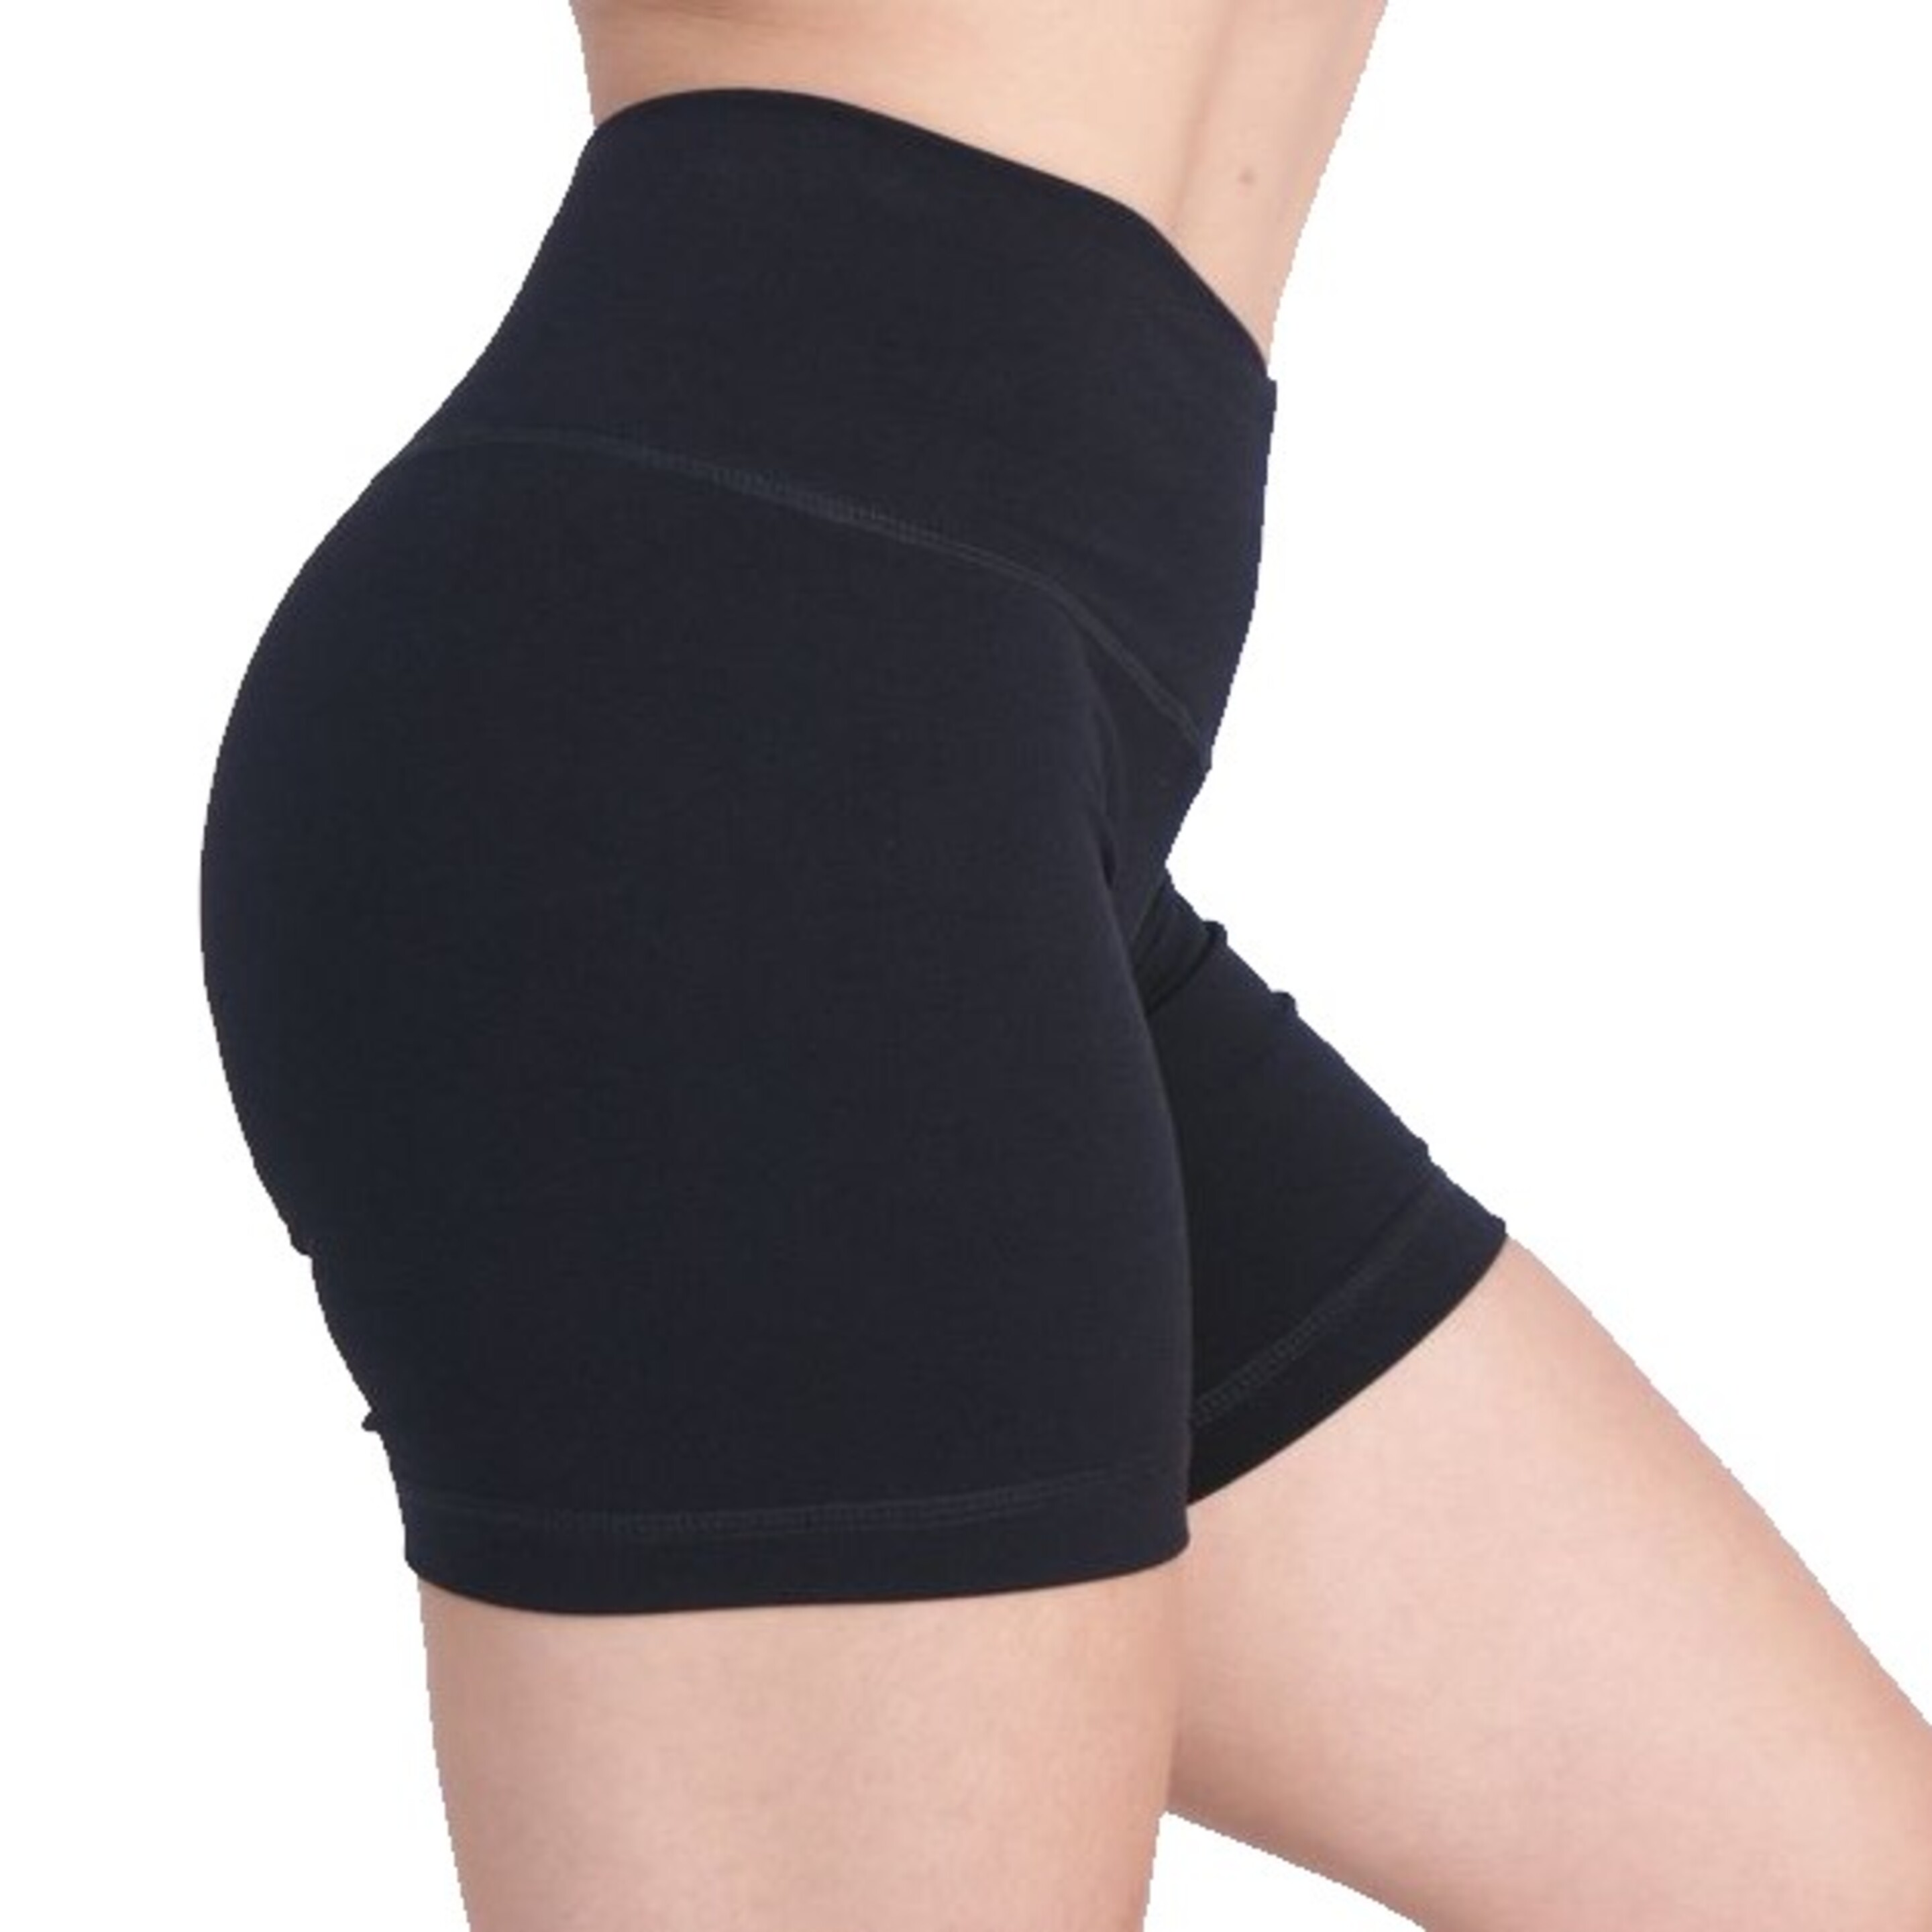 Short Deportivo Mujer Suplex Negro Clásico - negro - Pantalones Cortos Fitness  MKP